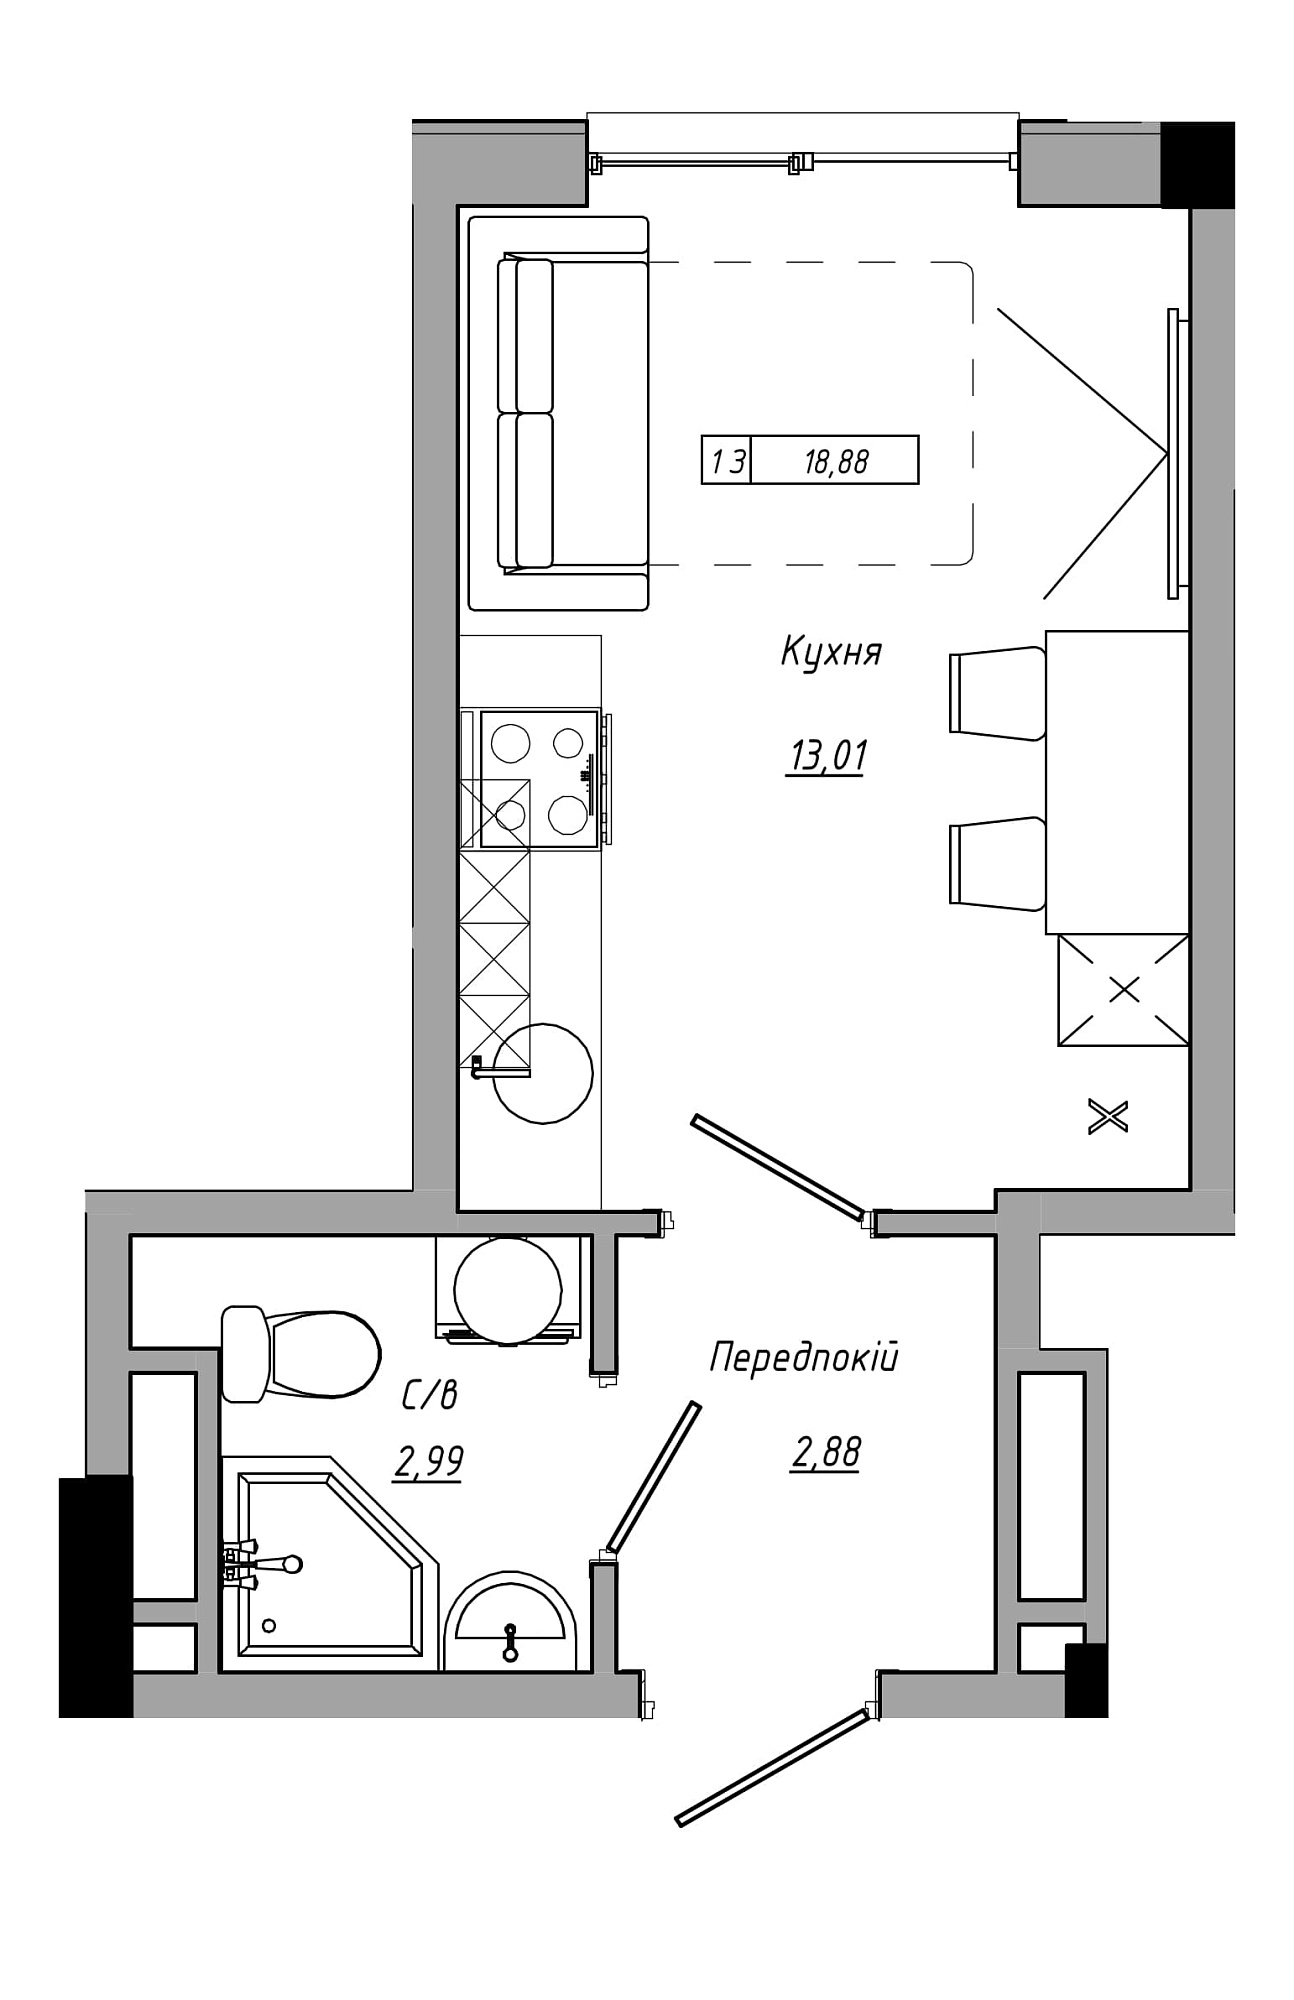 Planning Smart flats area 18.88m2, AB-21-06/00011.